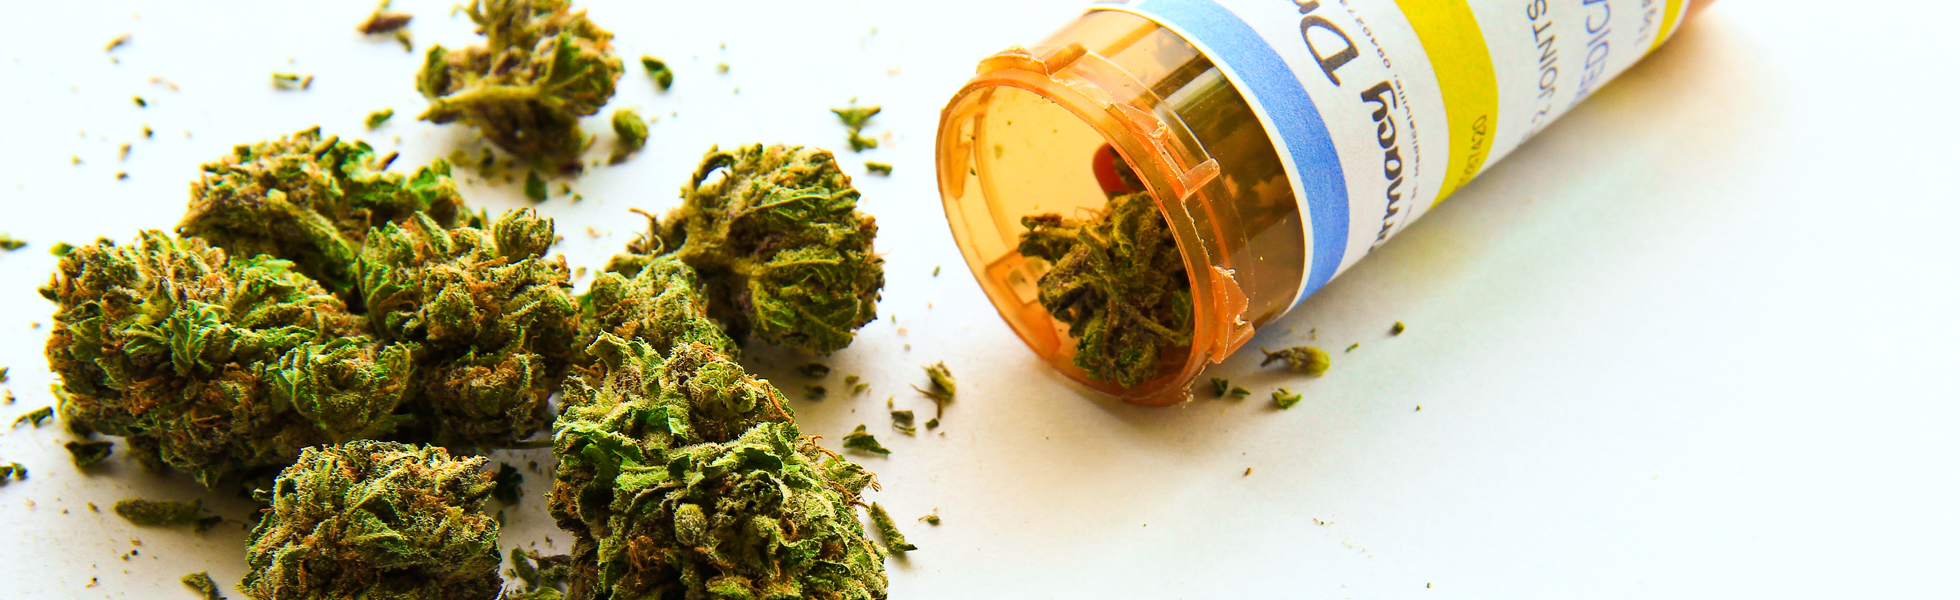 Filing Marijuana and Cannabis